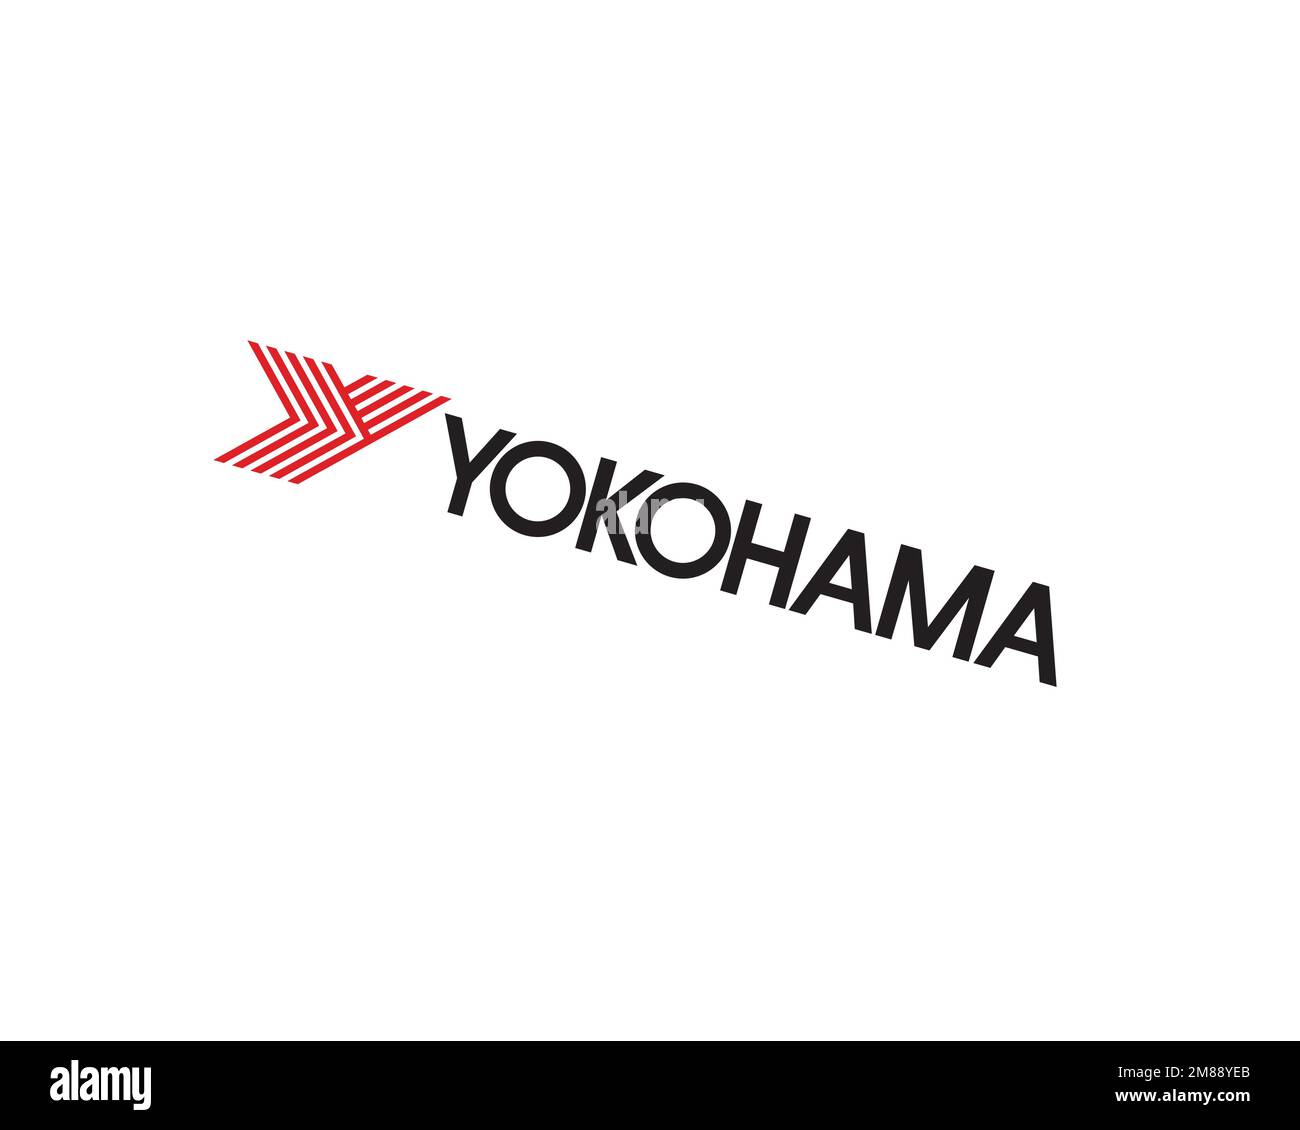 Yokohama Rubber Company, Rotated Logo, White Background B Stock Photo